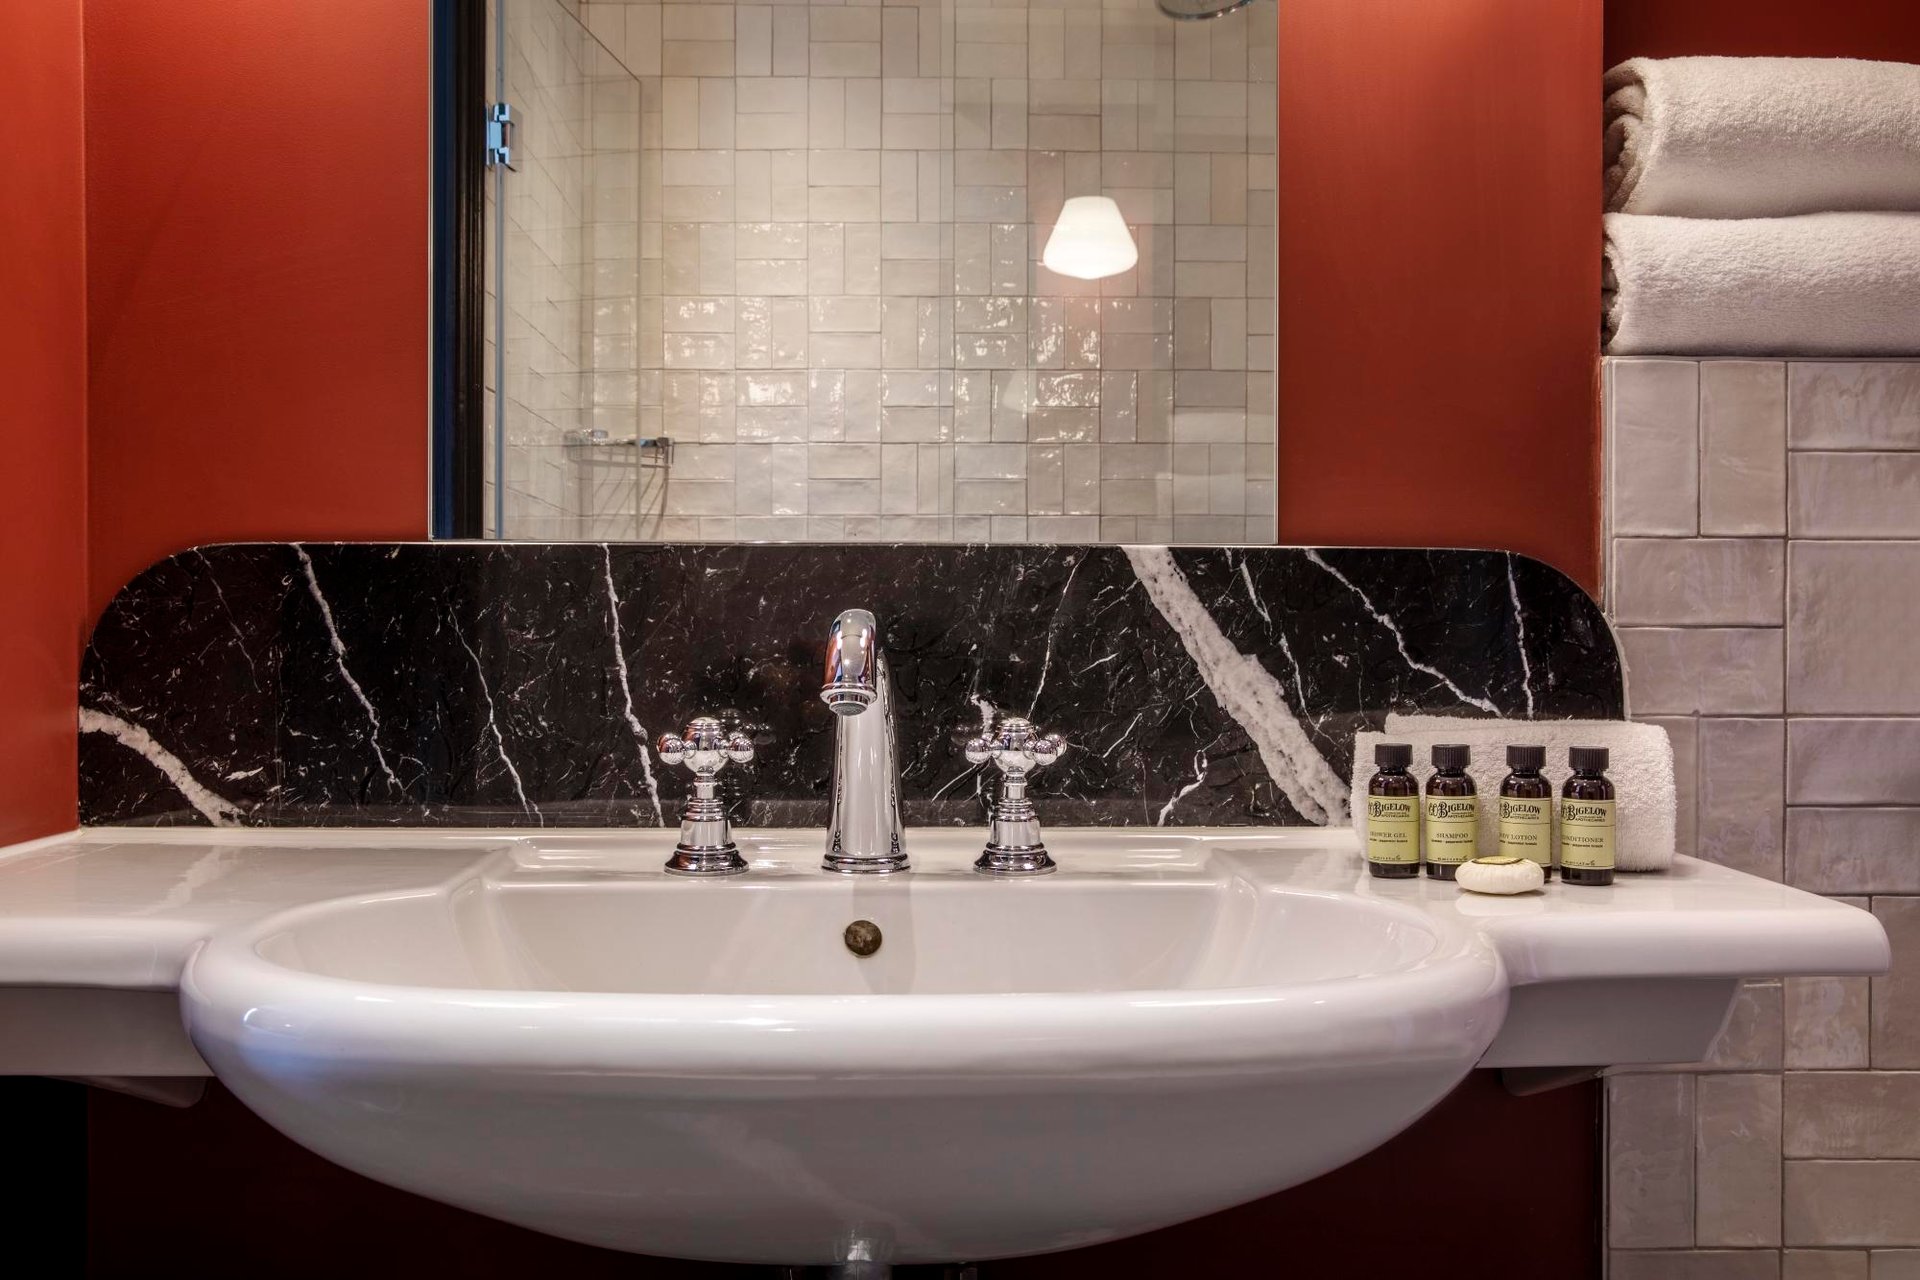 Grand Hotel Chicago Classic Room Bathroom Shower